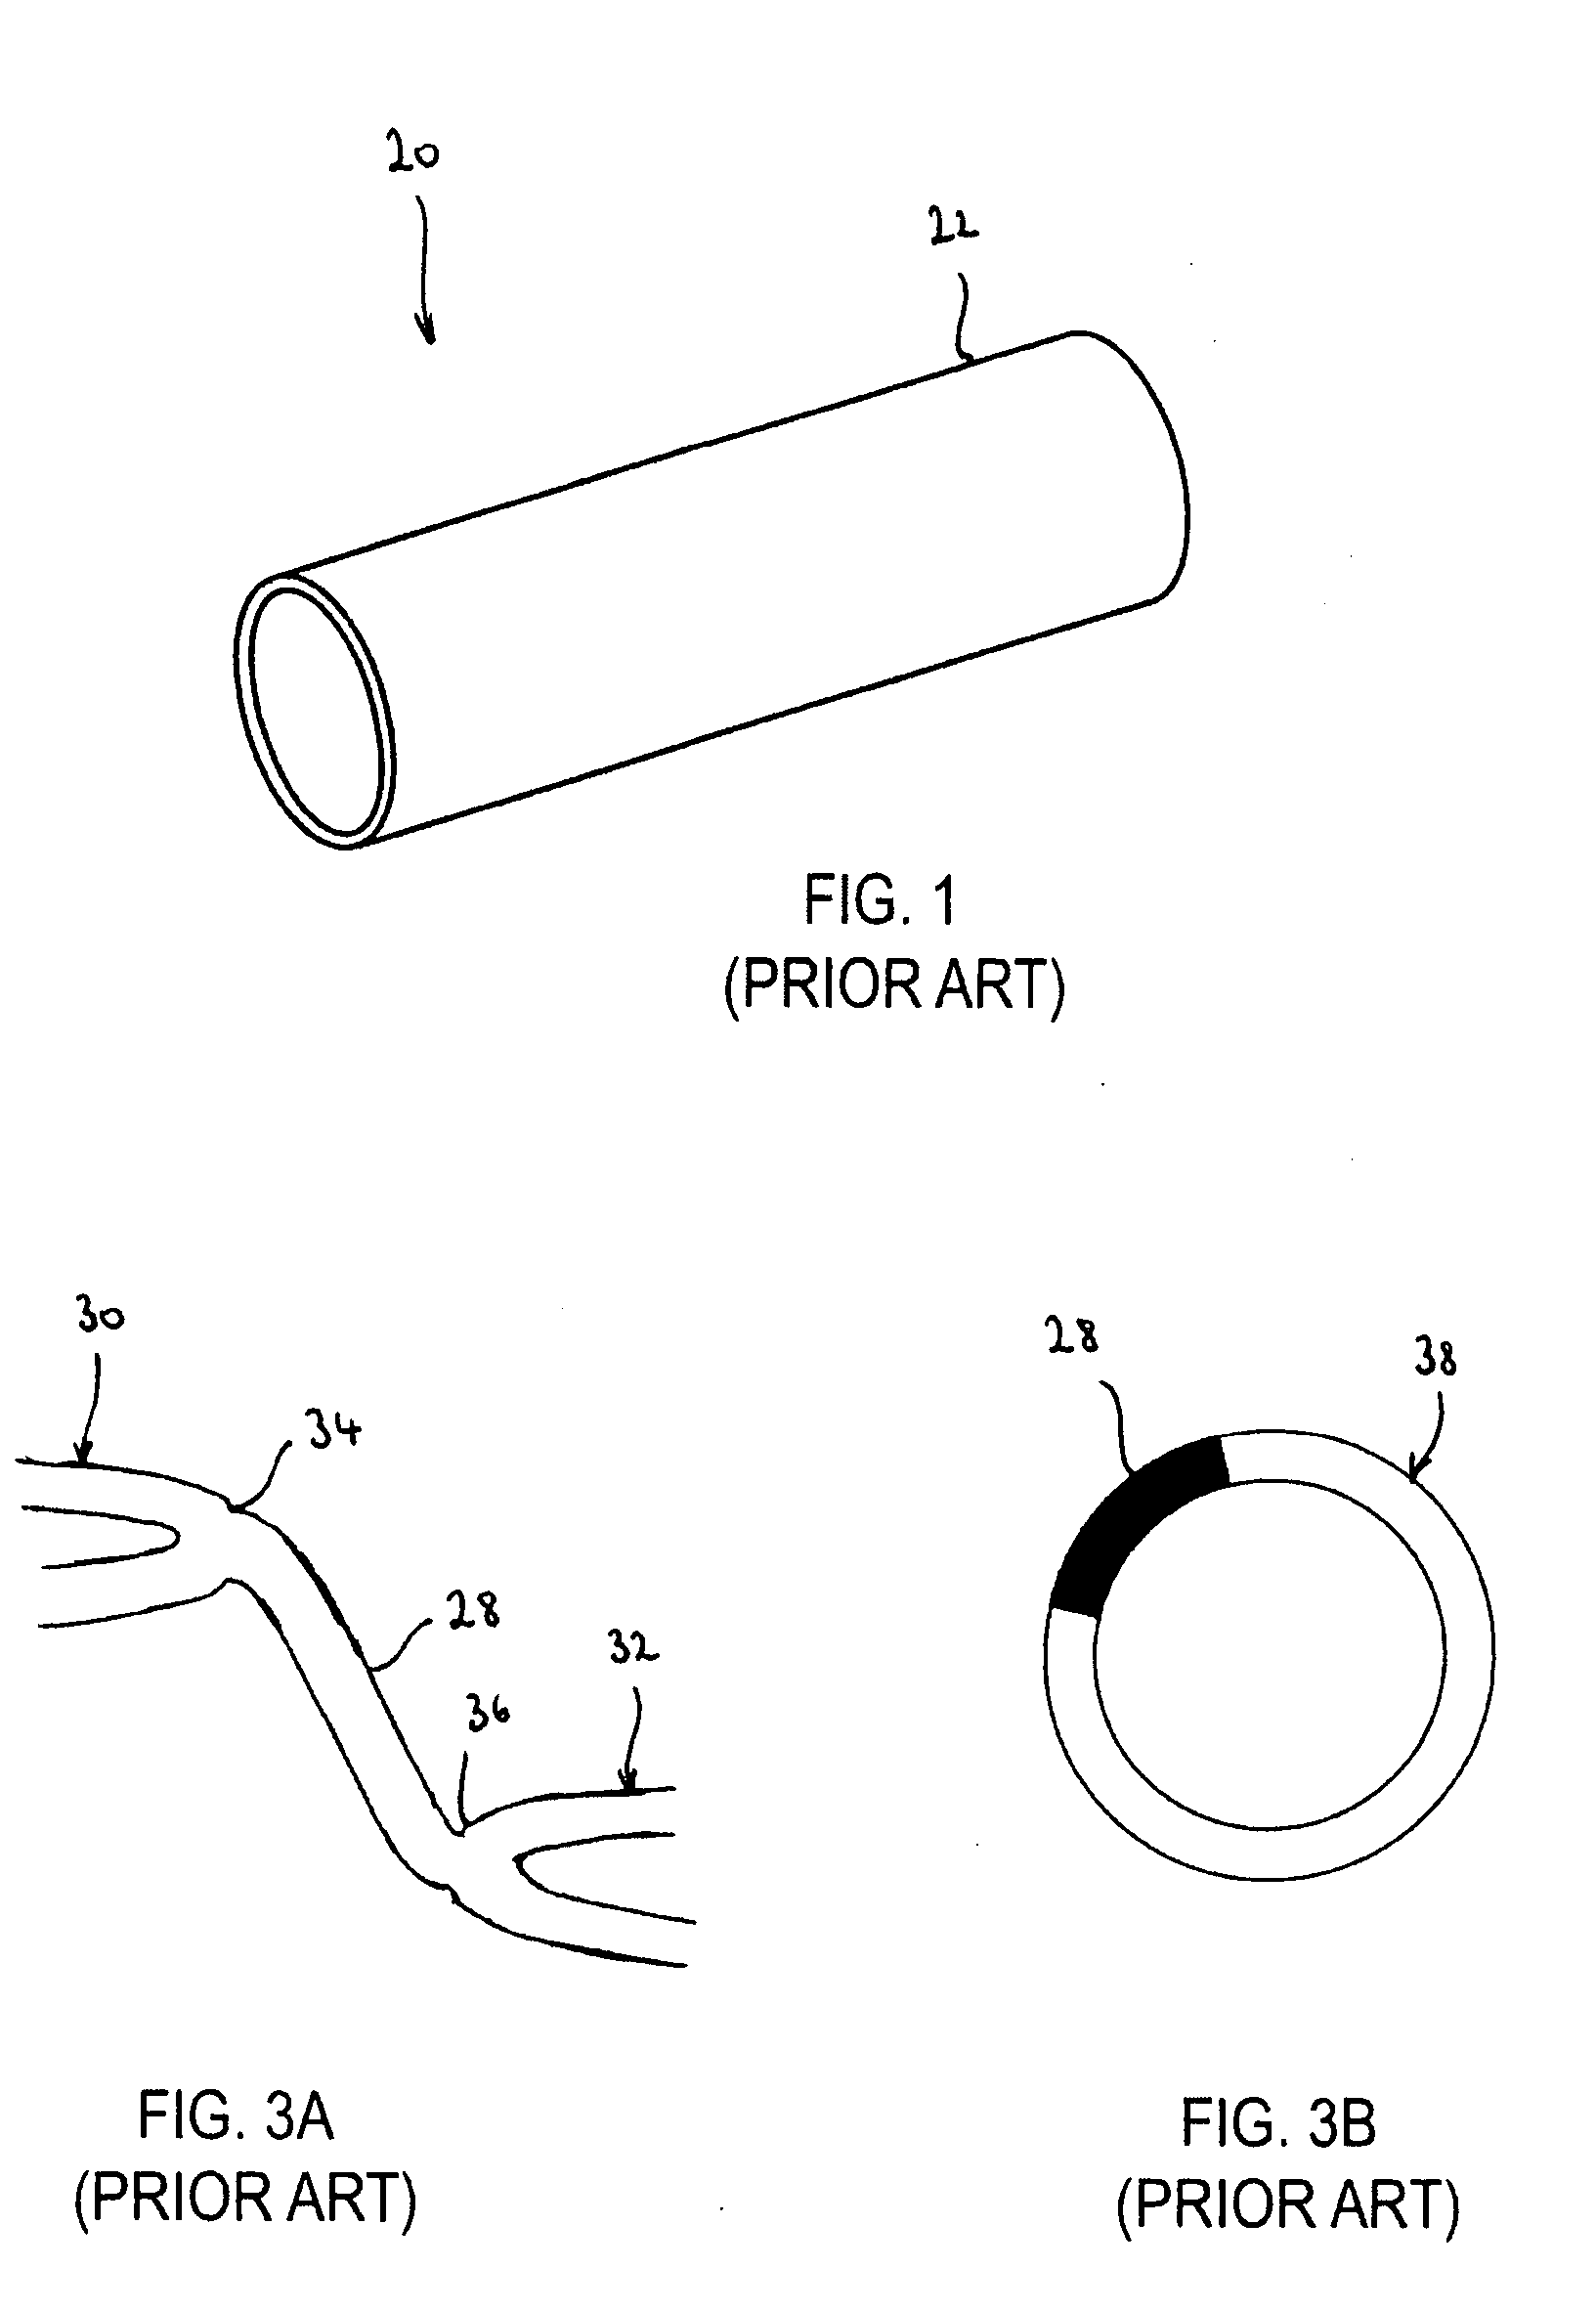 Flexible stent with torque-absorbing connectors